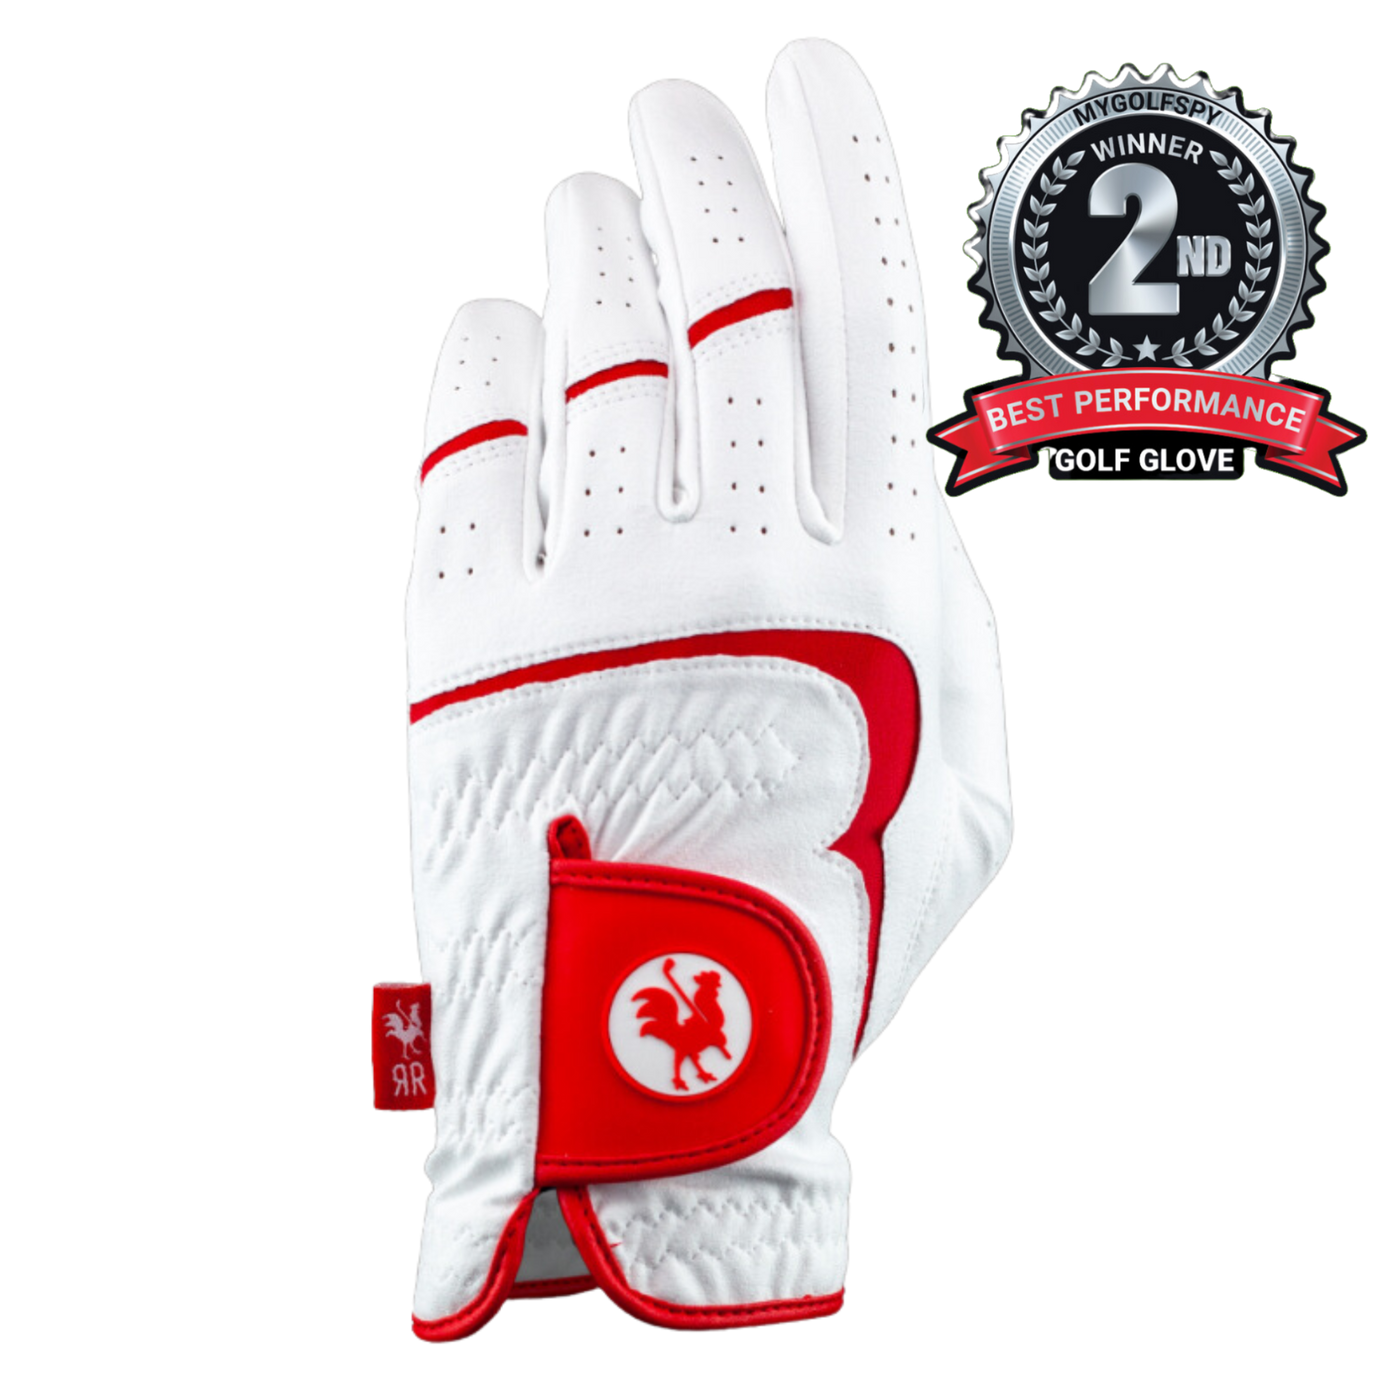 The Range Rooster left hand golf glove